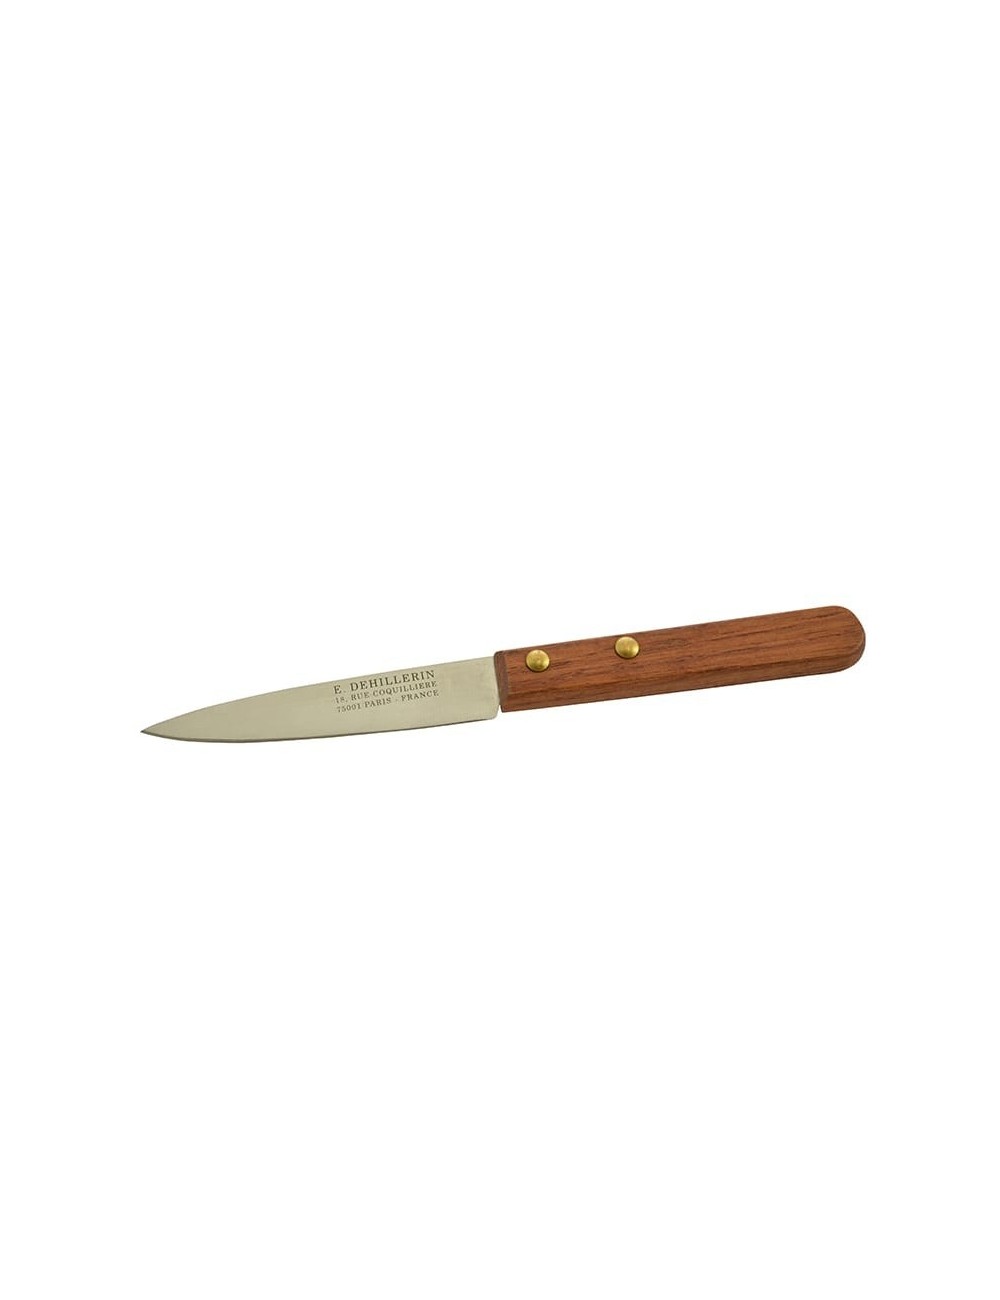 MUSHROOM PARING KNIFE (HANDLE COLOR - NATURAL WOOD)